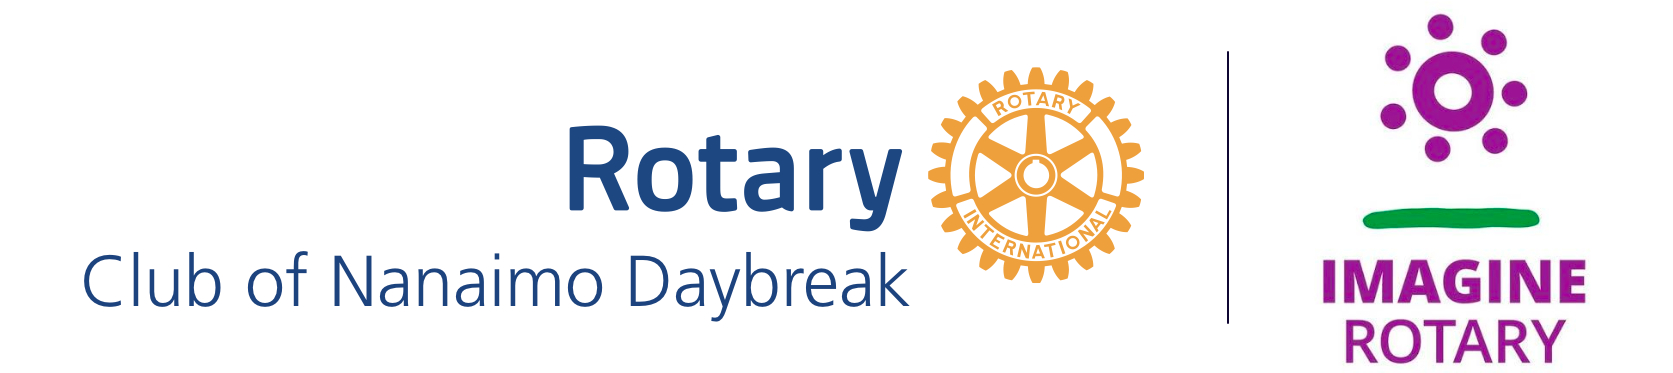 Rotary Club of Nanaimo Daybreak